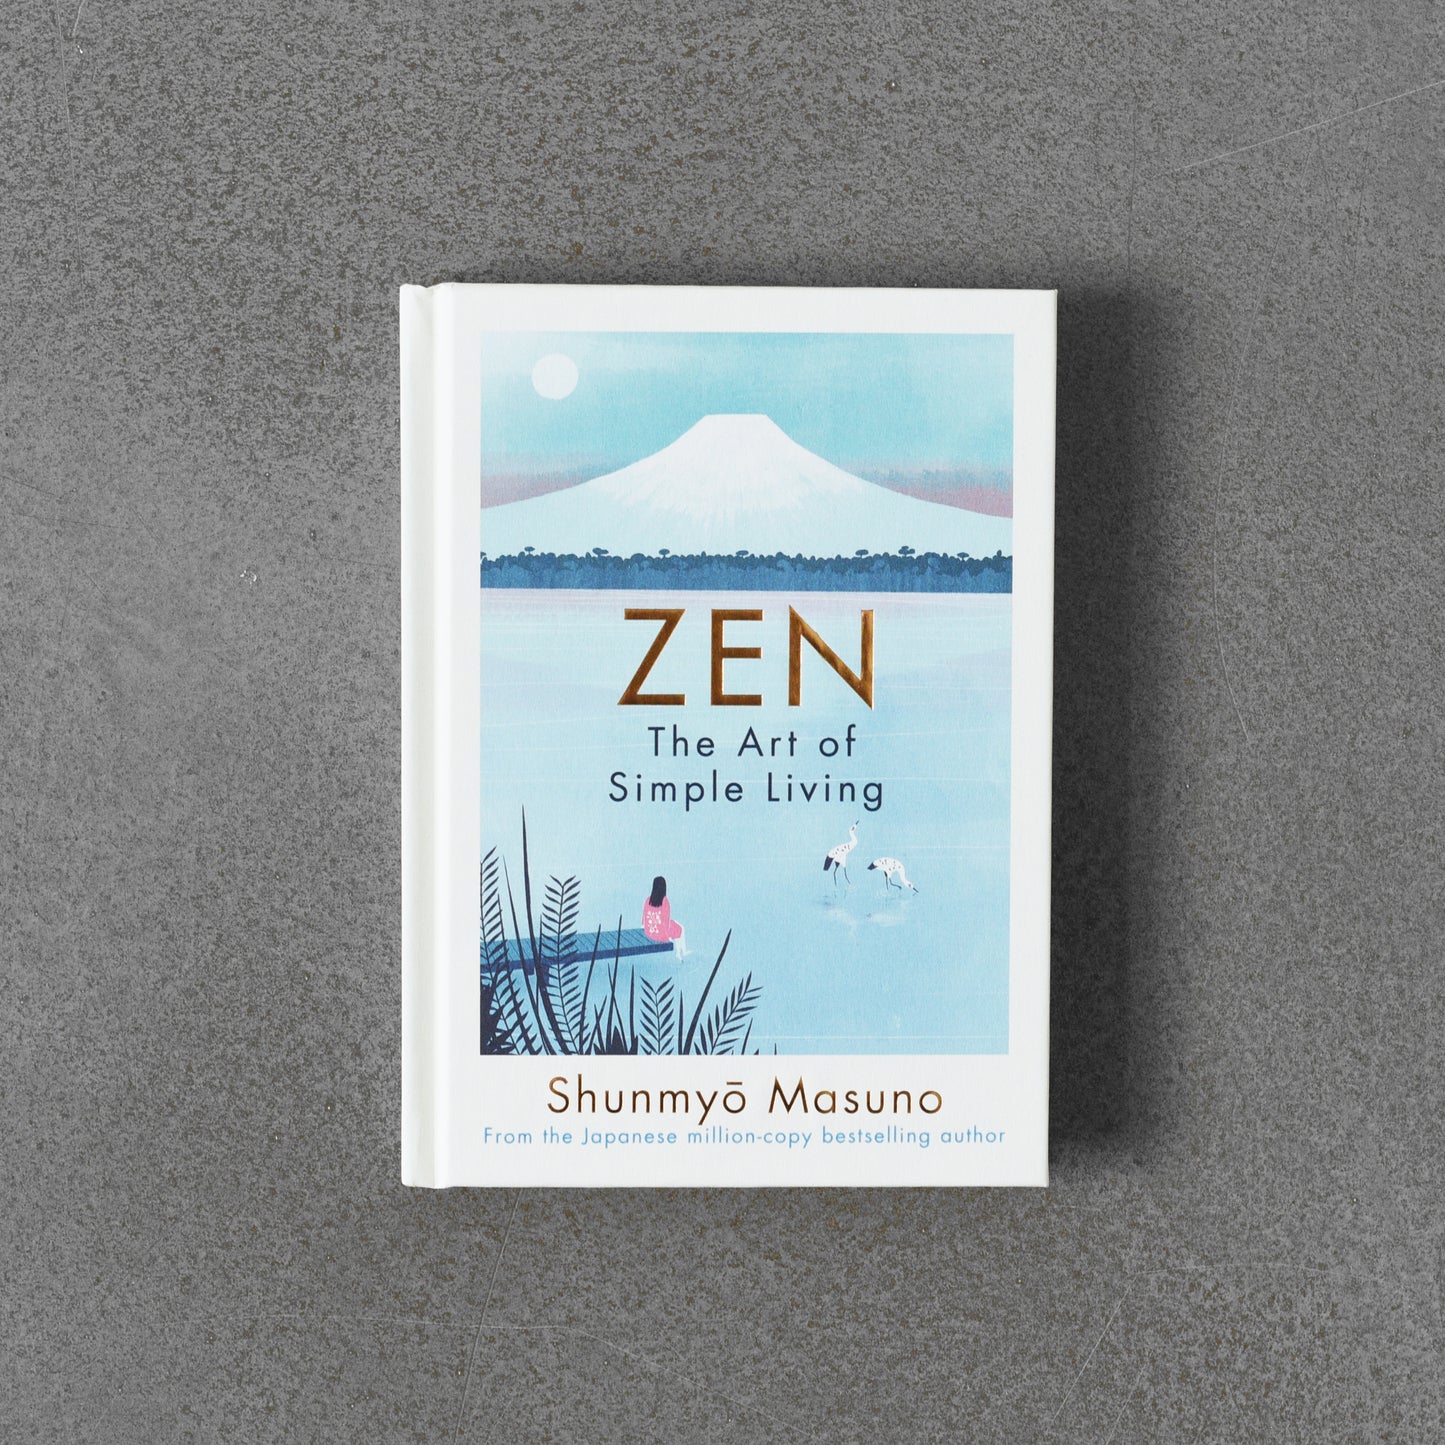 Zen The Art of Living Simple Life - Shunmyō Masuno